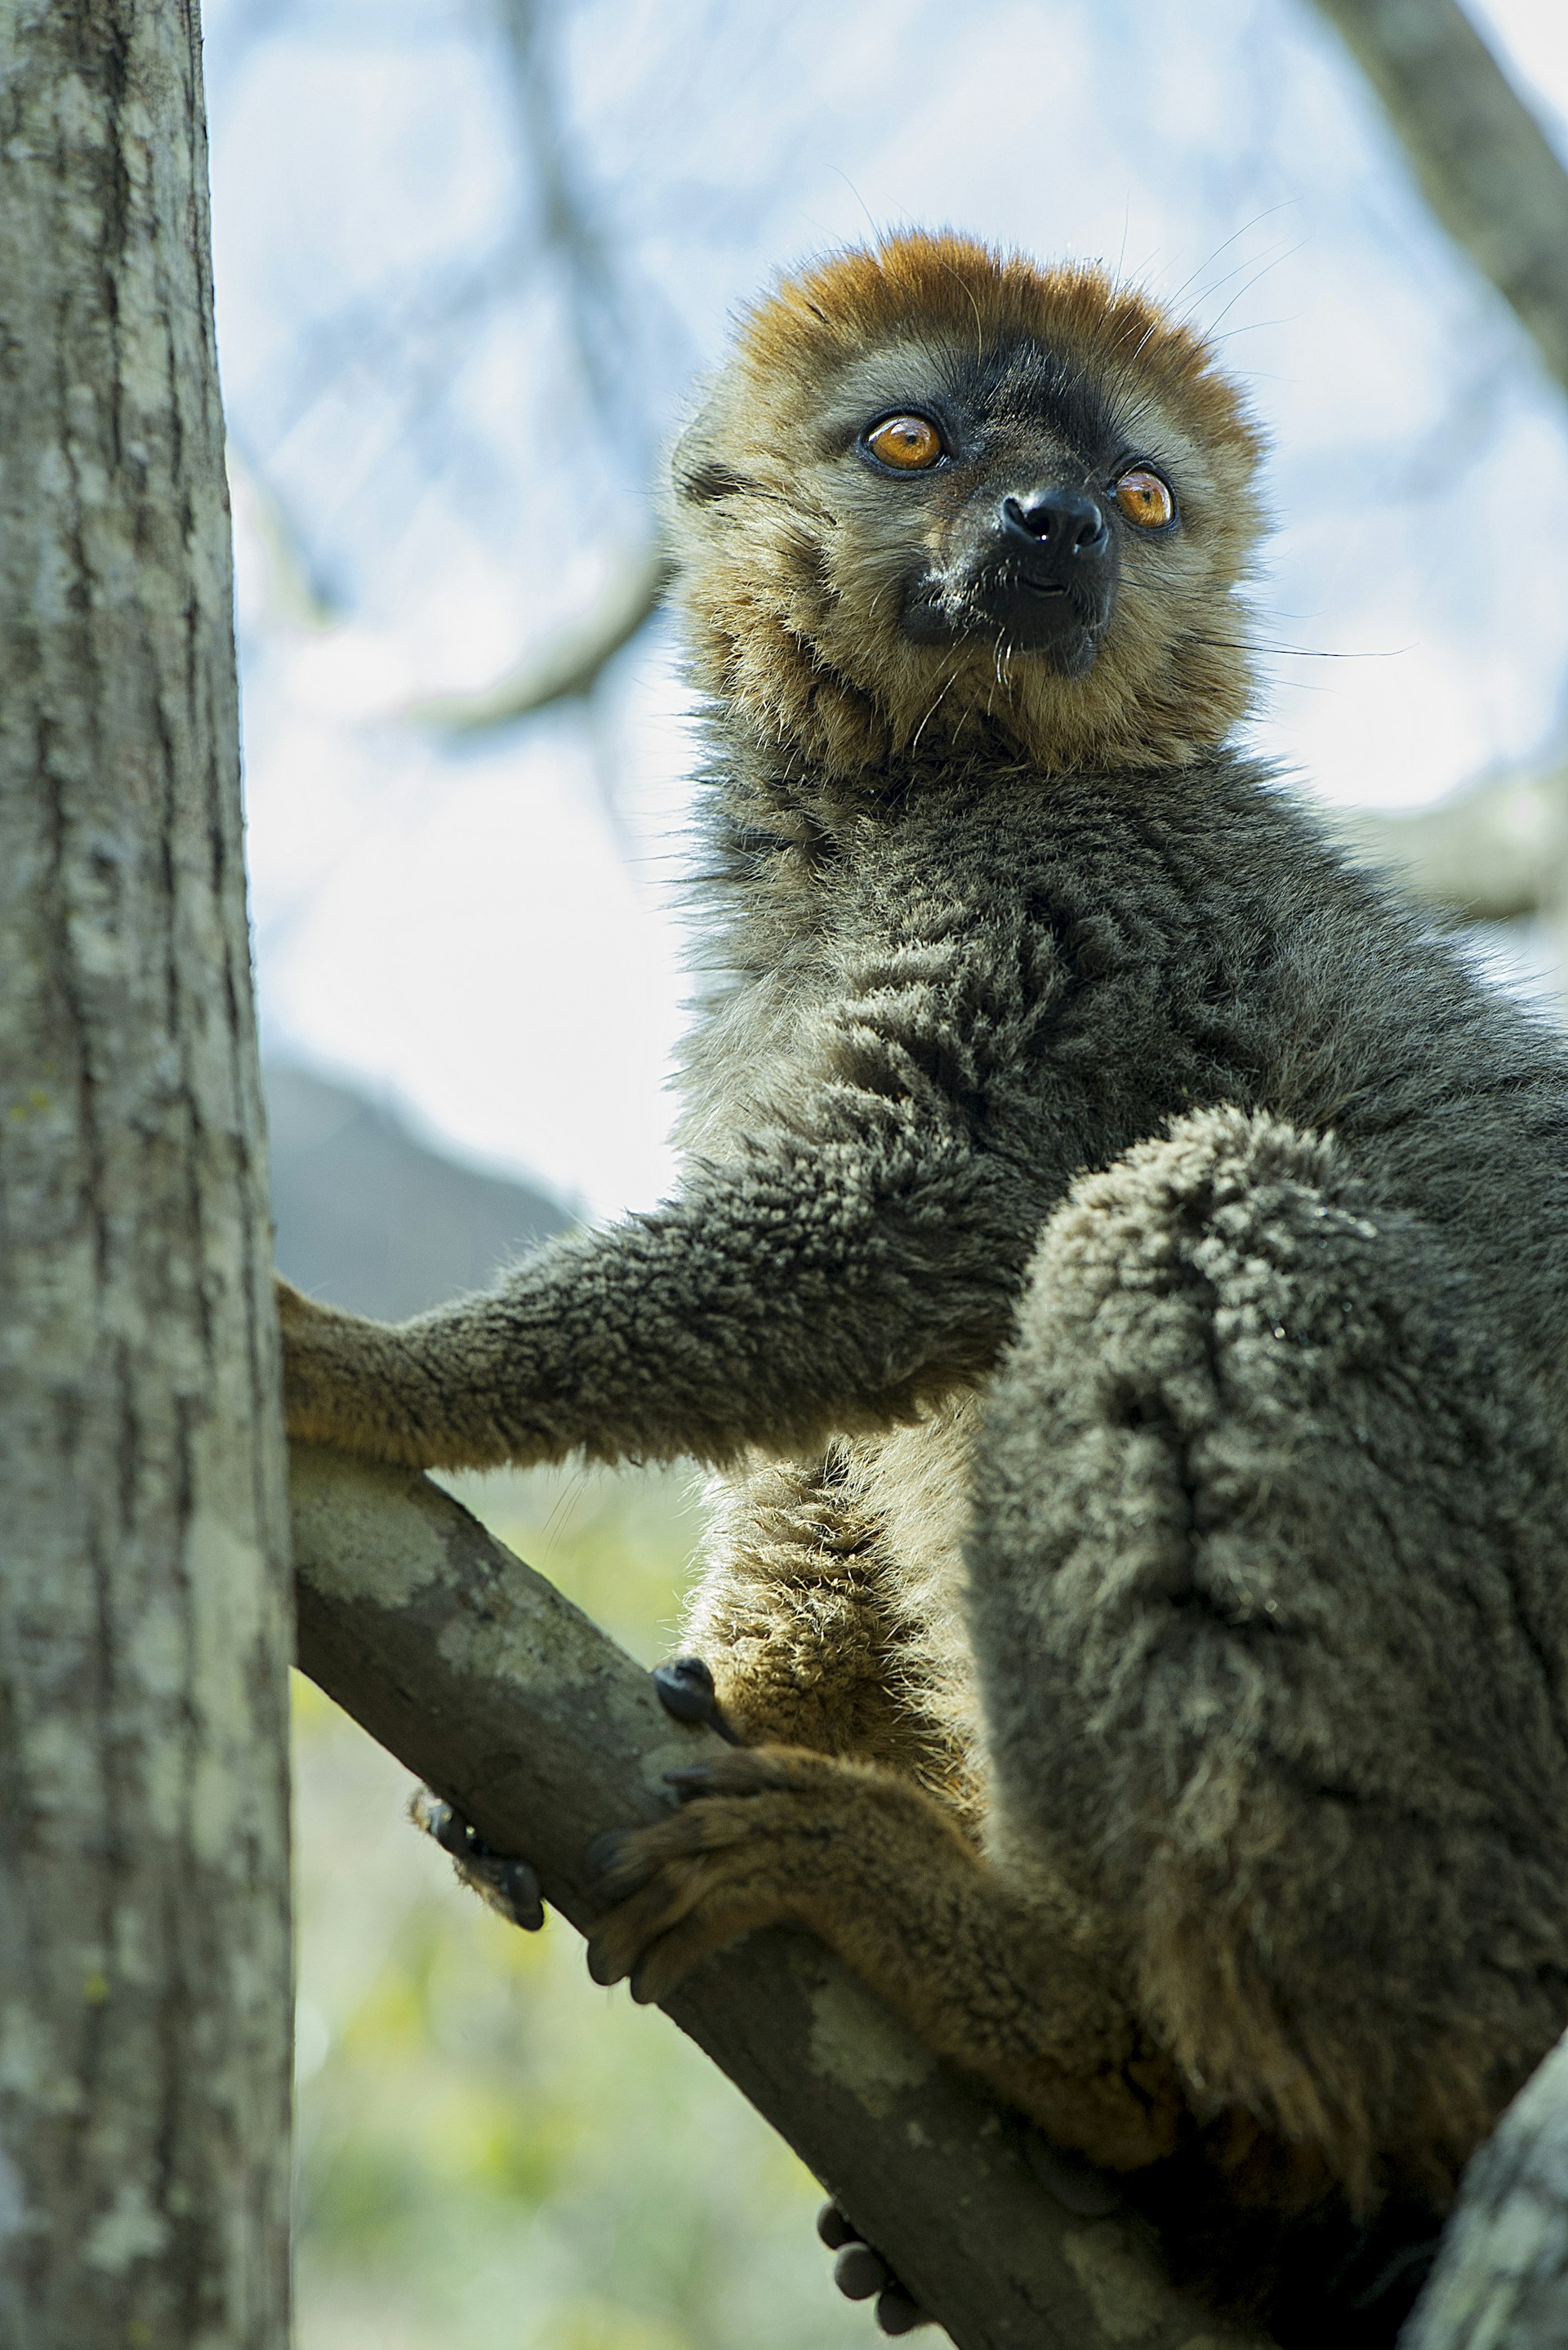 A lemur on a tree branch